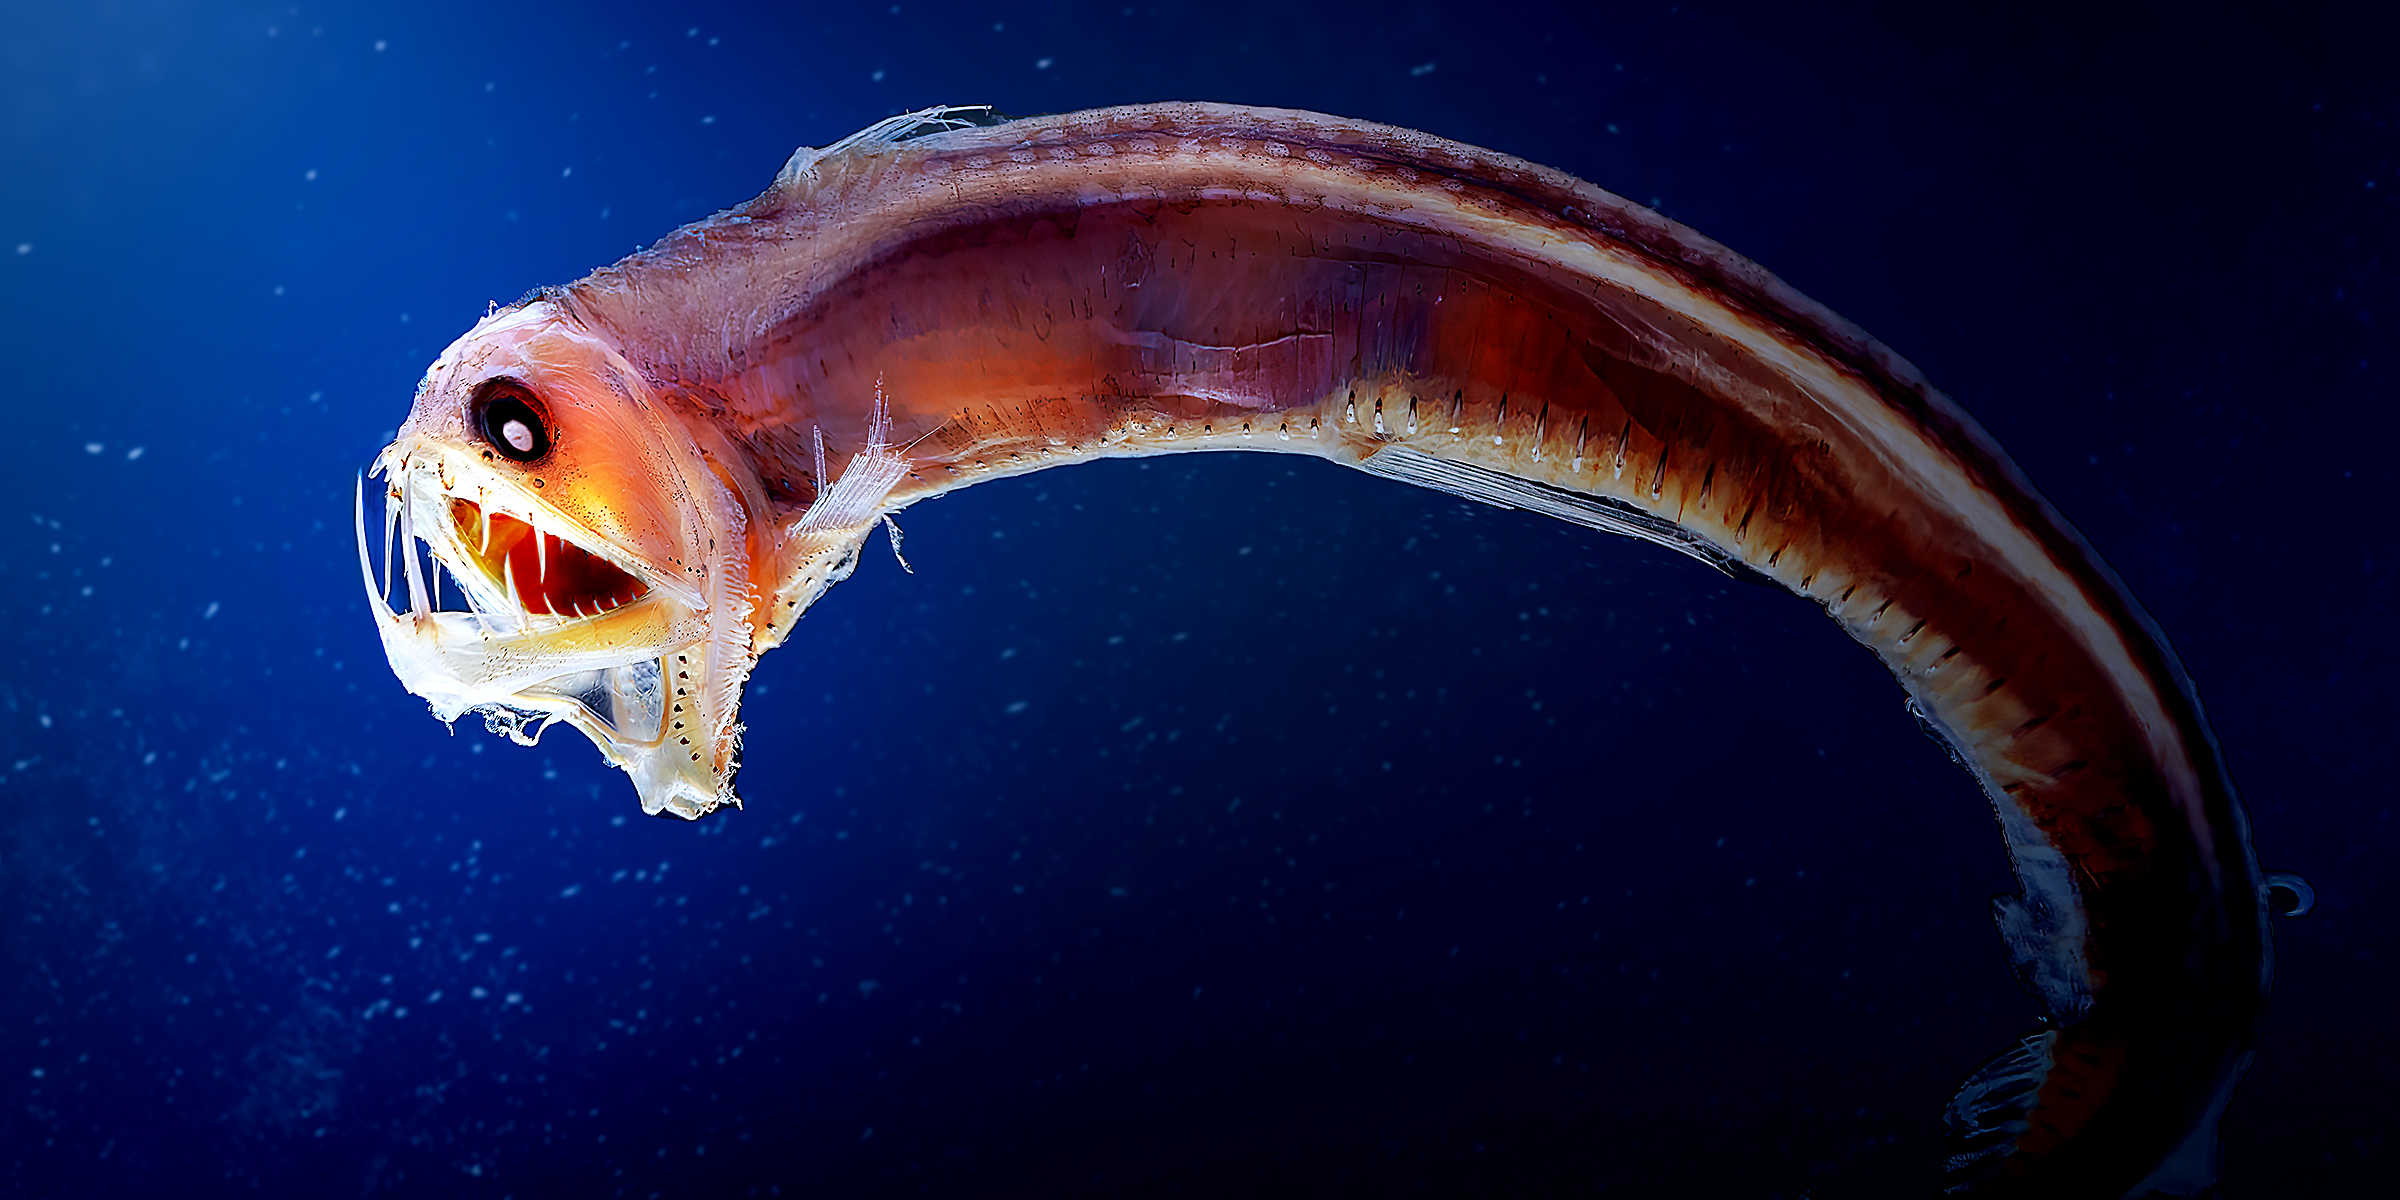 A Sloane viperfish | Source: Shutterstock